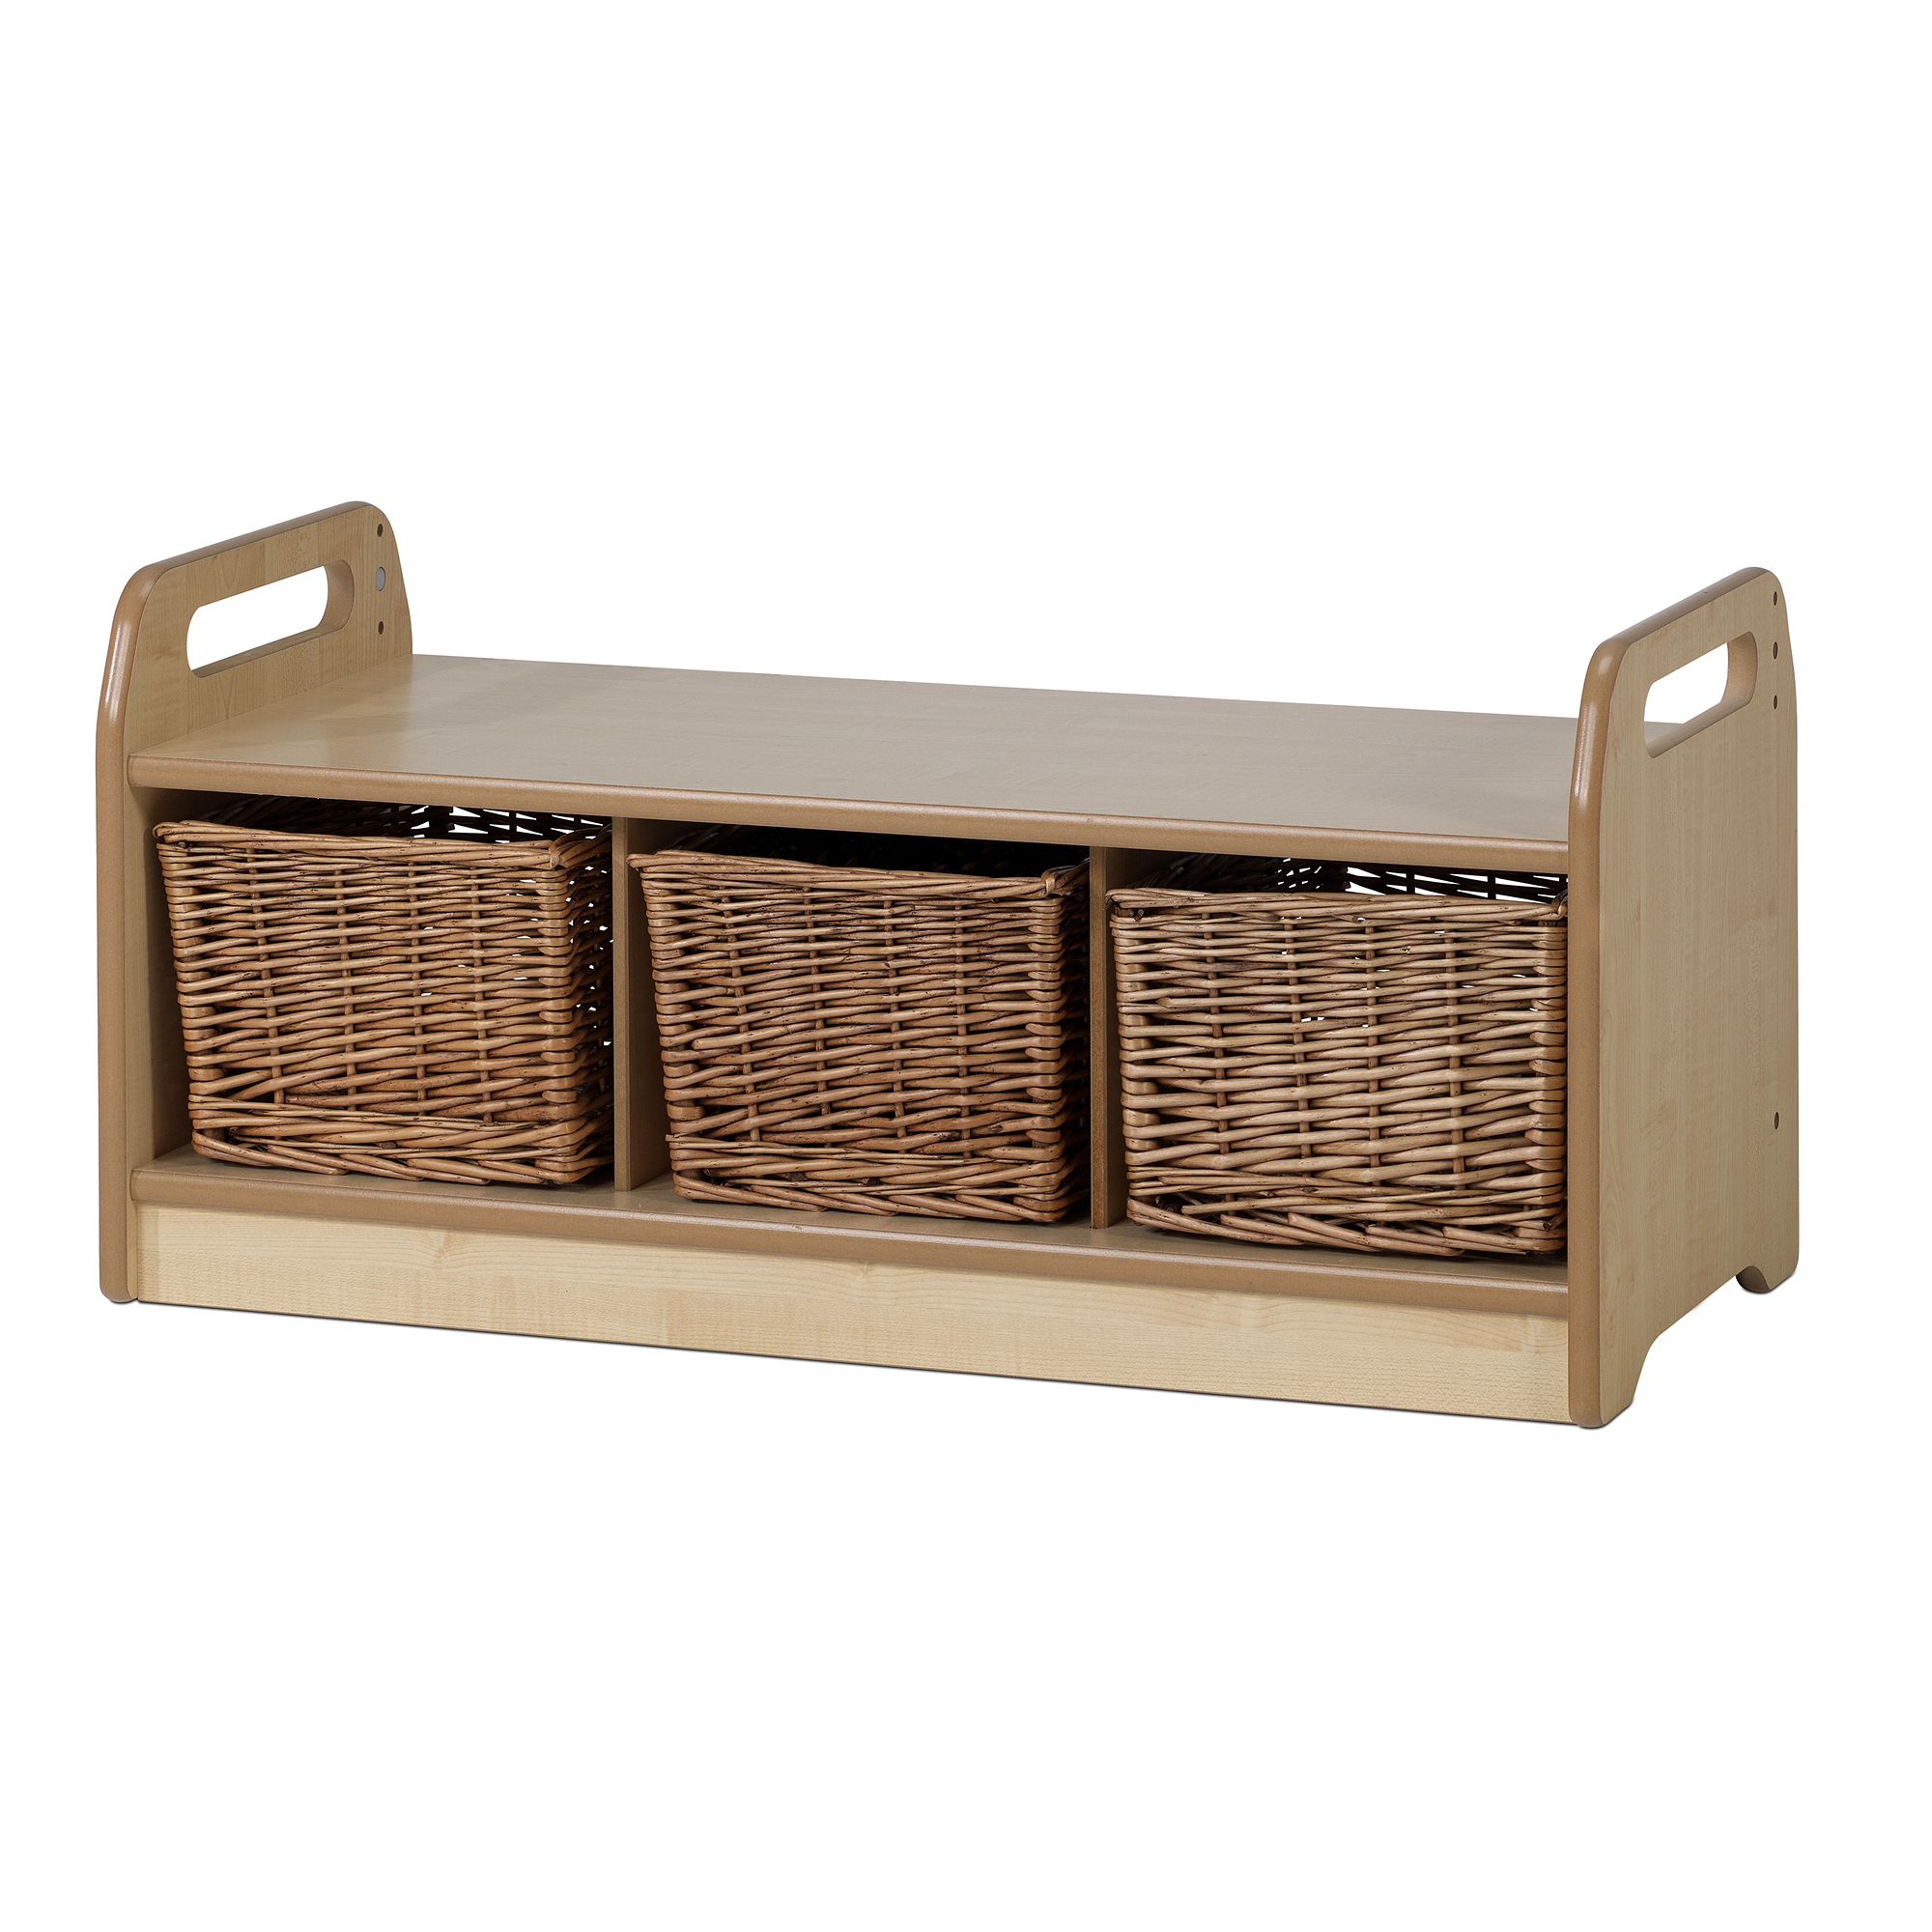 Millhouse Low Level Storage Bench With, Wicker Basket Shelves